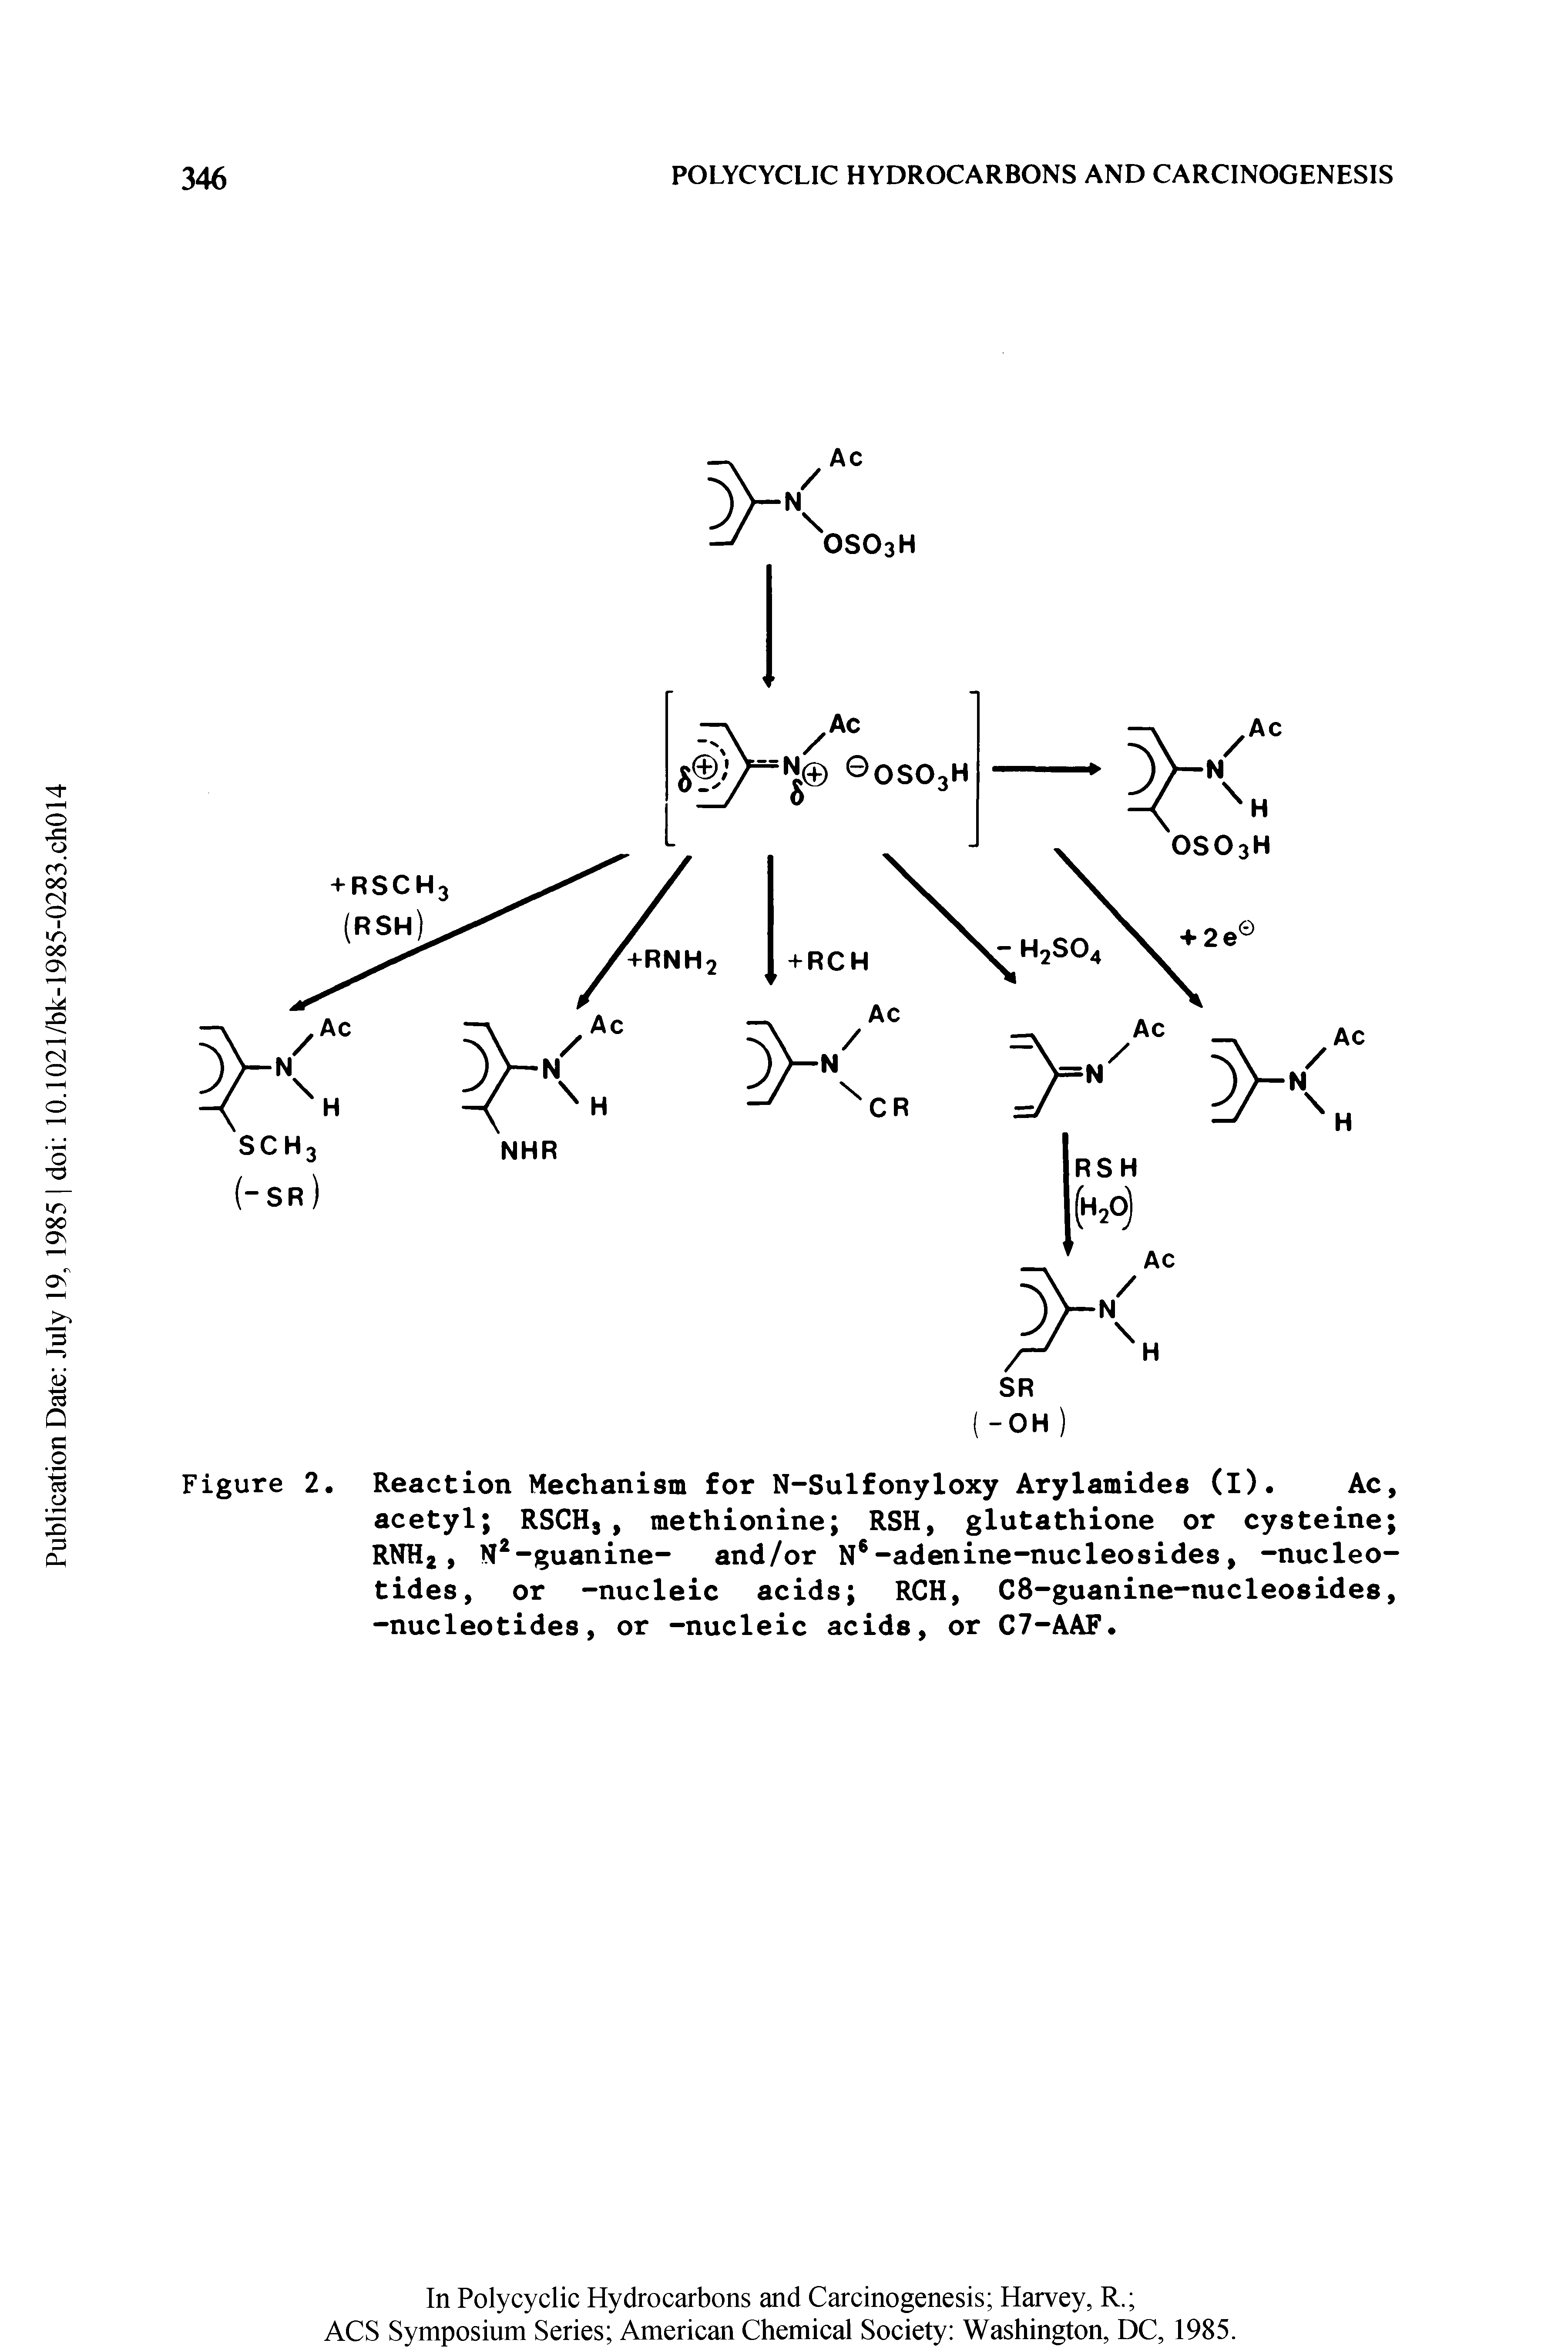 Figure 2. Reaction Mechanism for N-Sulfonyloxy Arylamides (I). Ac, acetyl RSCHs, methionine RSH, glutathione or cysteine RNH2, N2-guanine- and/or N6-adenine-nucleosides, -nucleotides, or -nucleic acids RCH, C8-guanine-nucleosides, -nucleotides, or -nucleic acids, or C7-AAF.